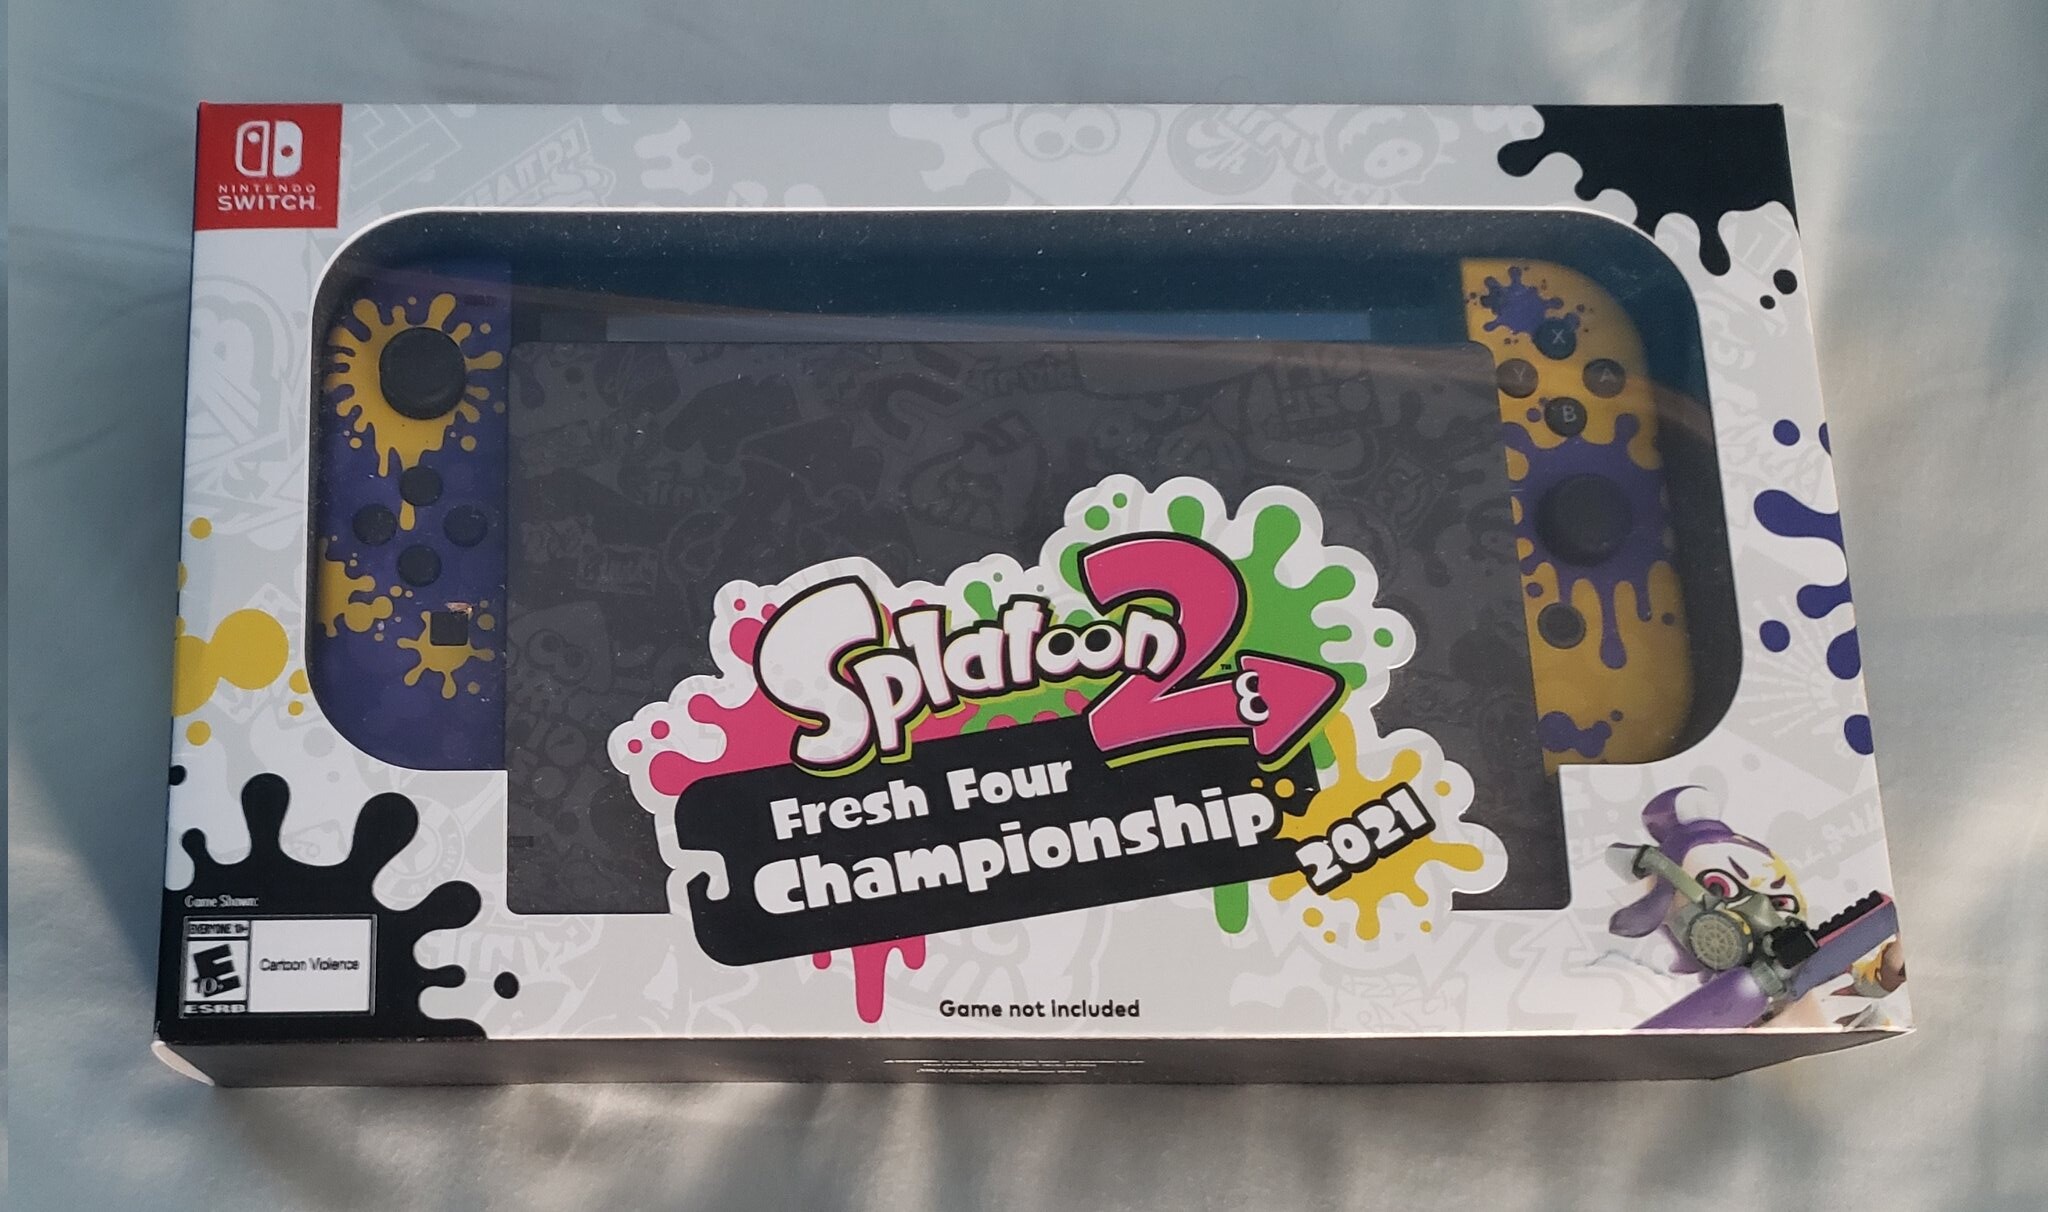  Nintendo Switch Splatoon 2 Fresh Four Championship Console